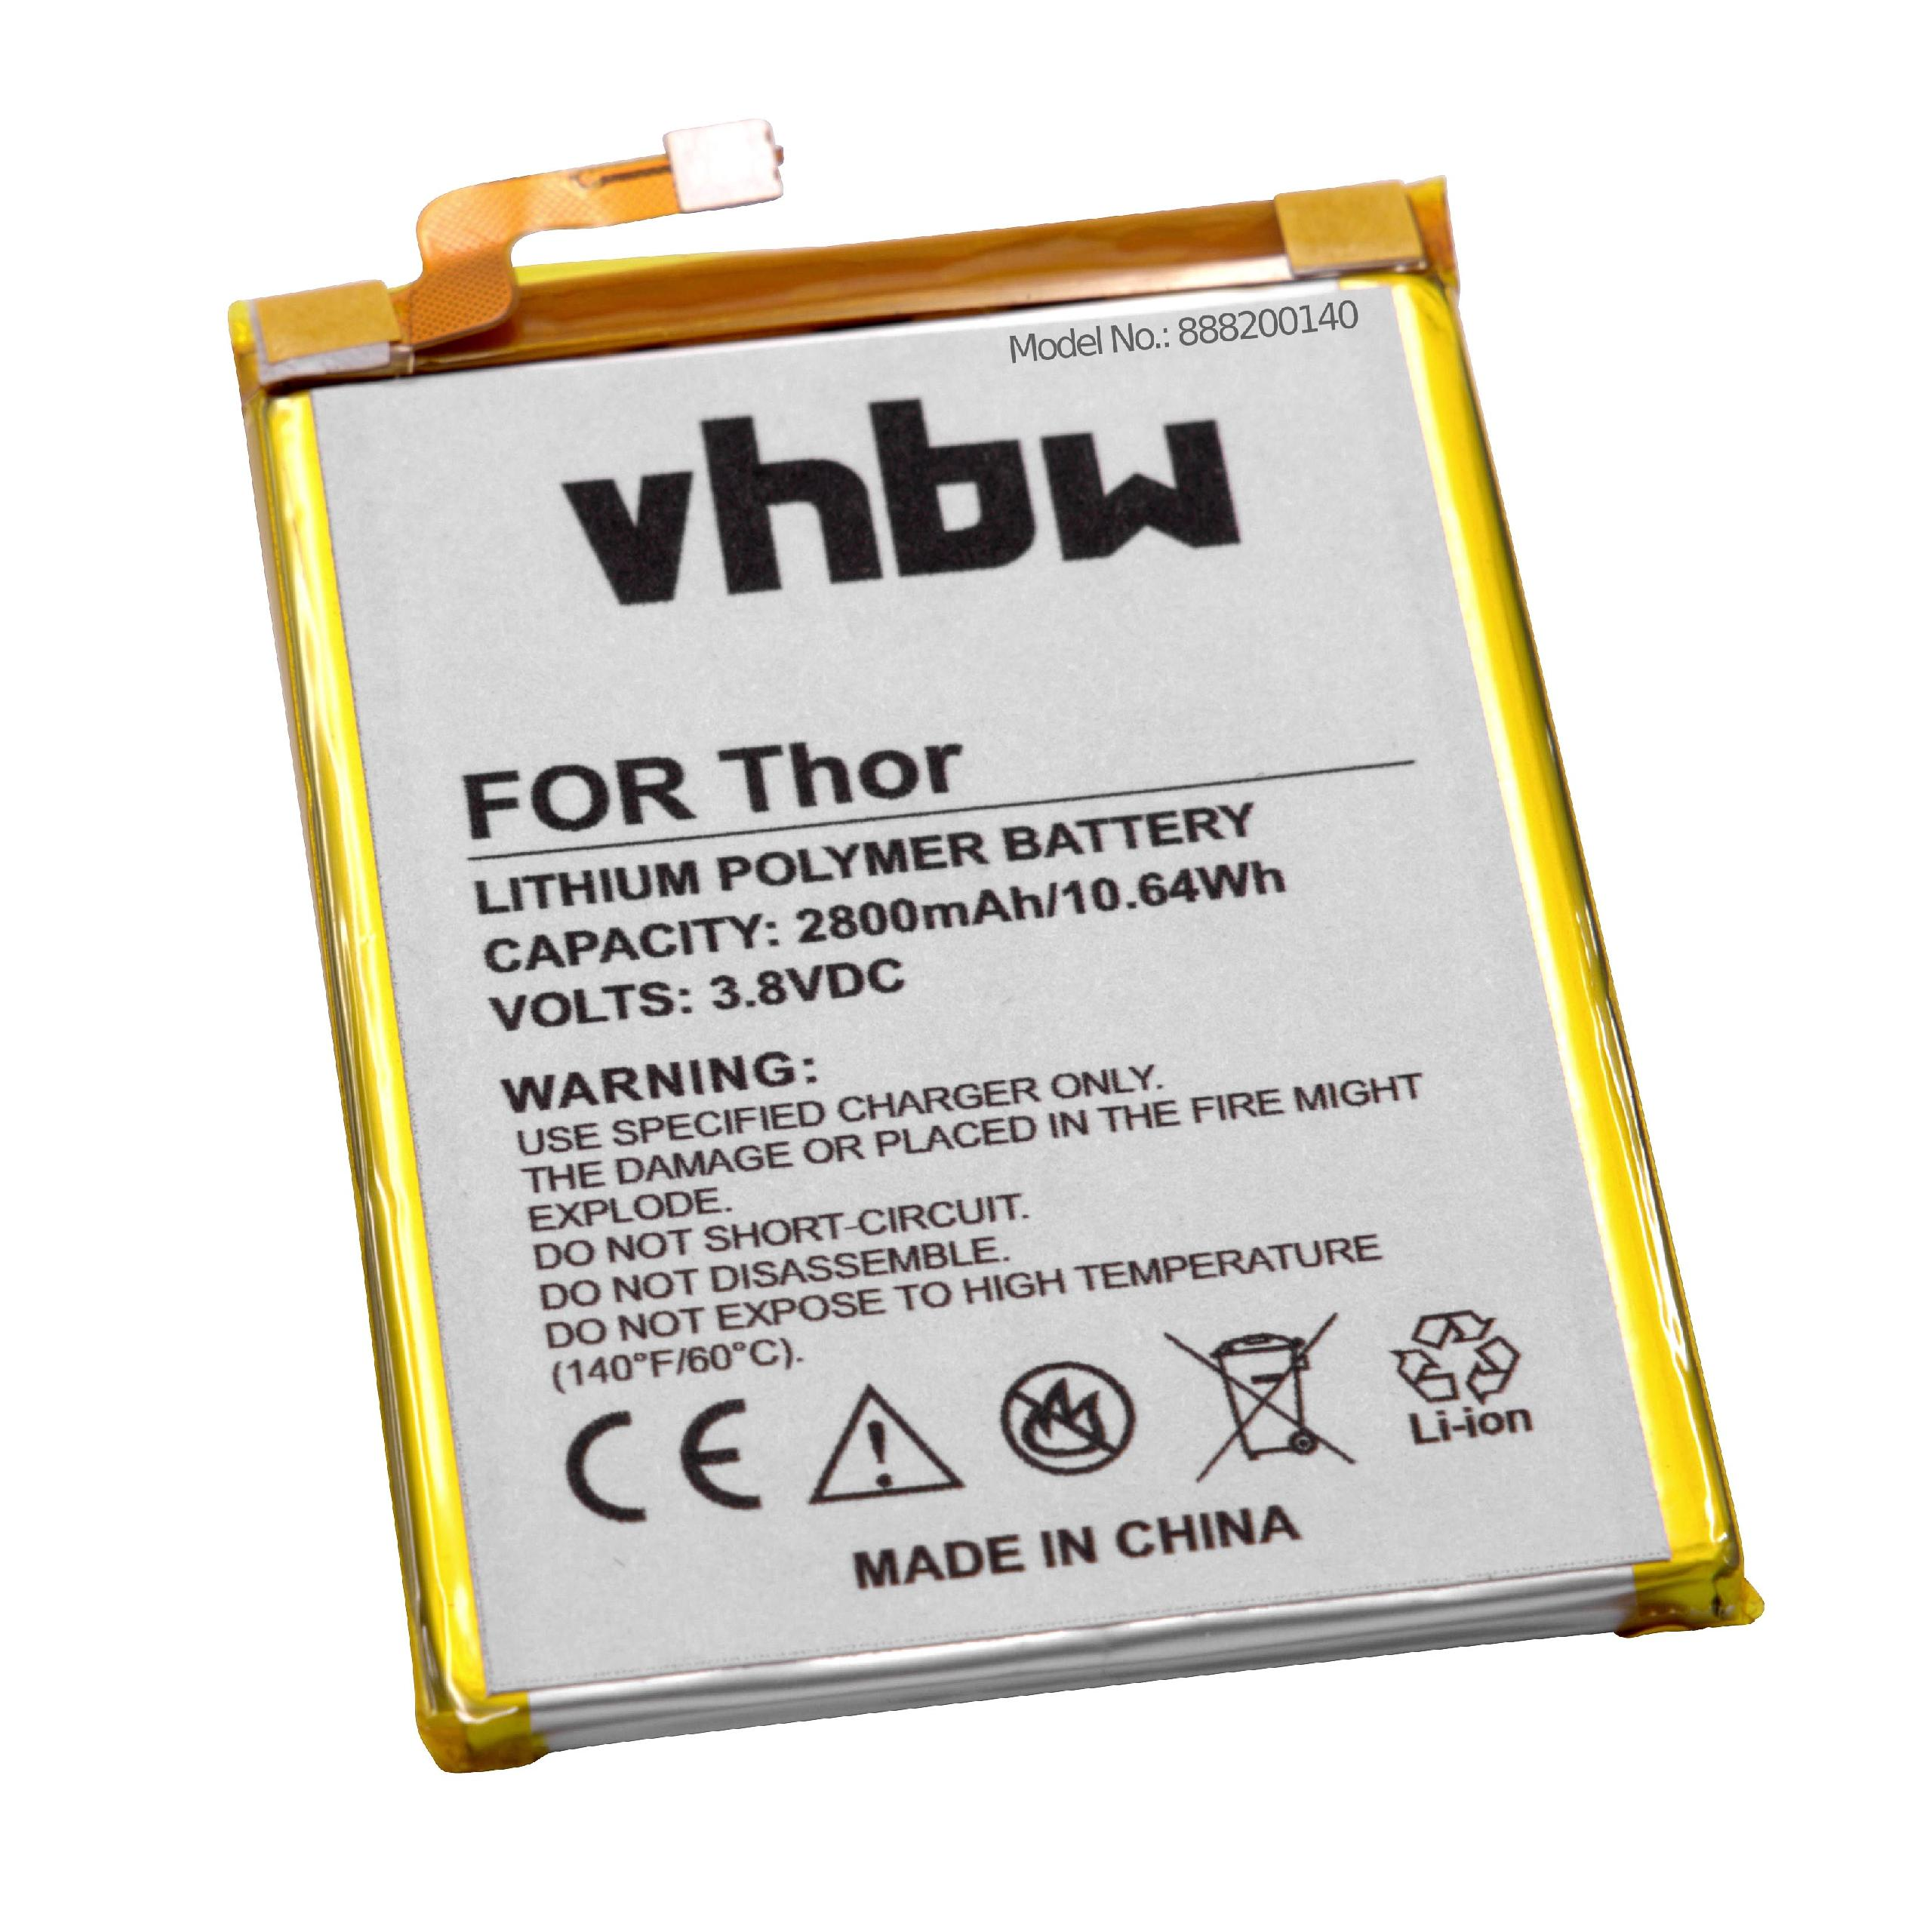 Li-Polymer Vernee 2800 kompatibel Akku Handy, VHBW - Thor mit